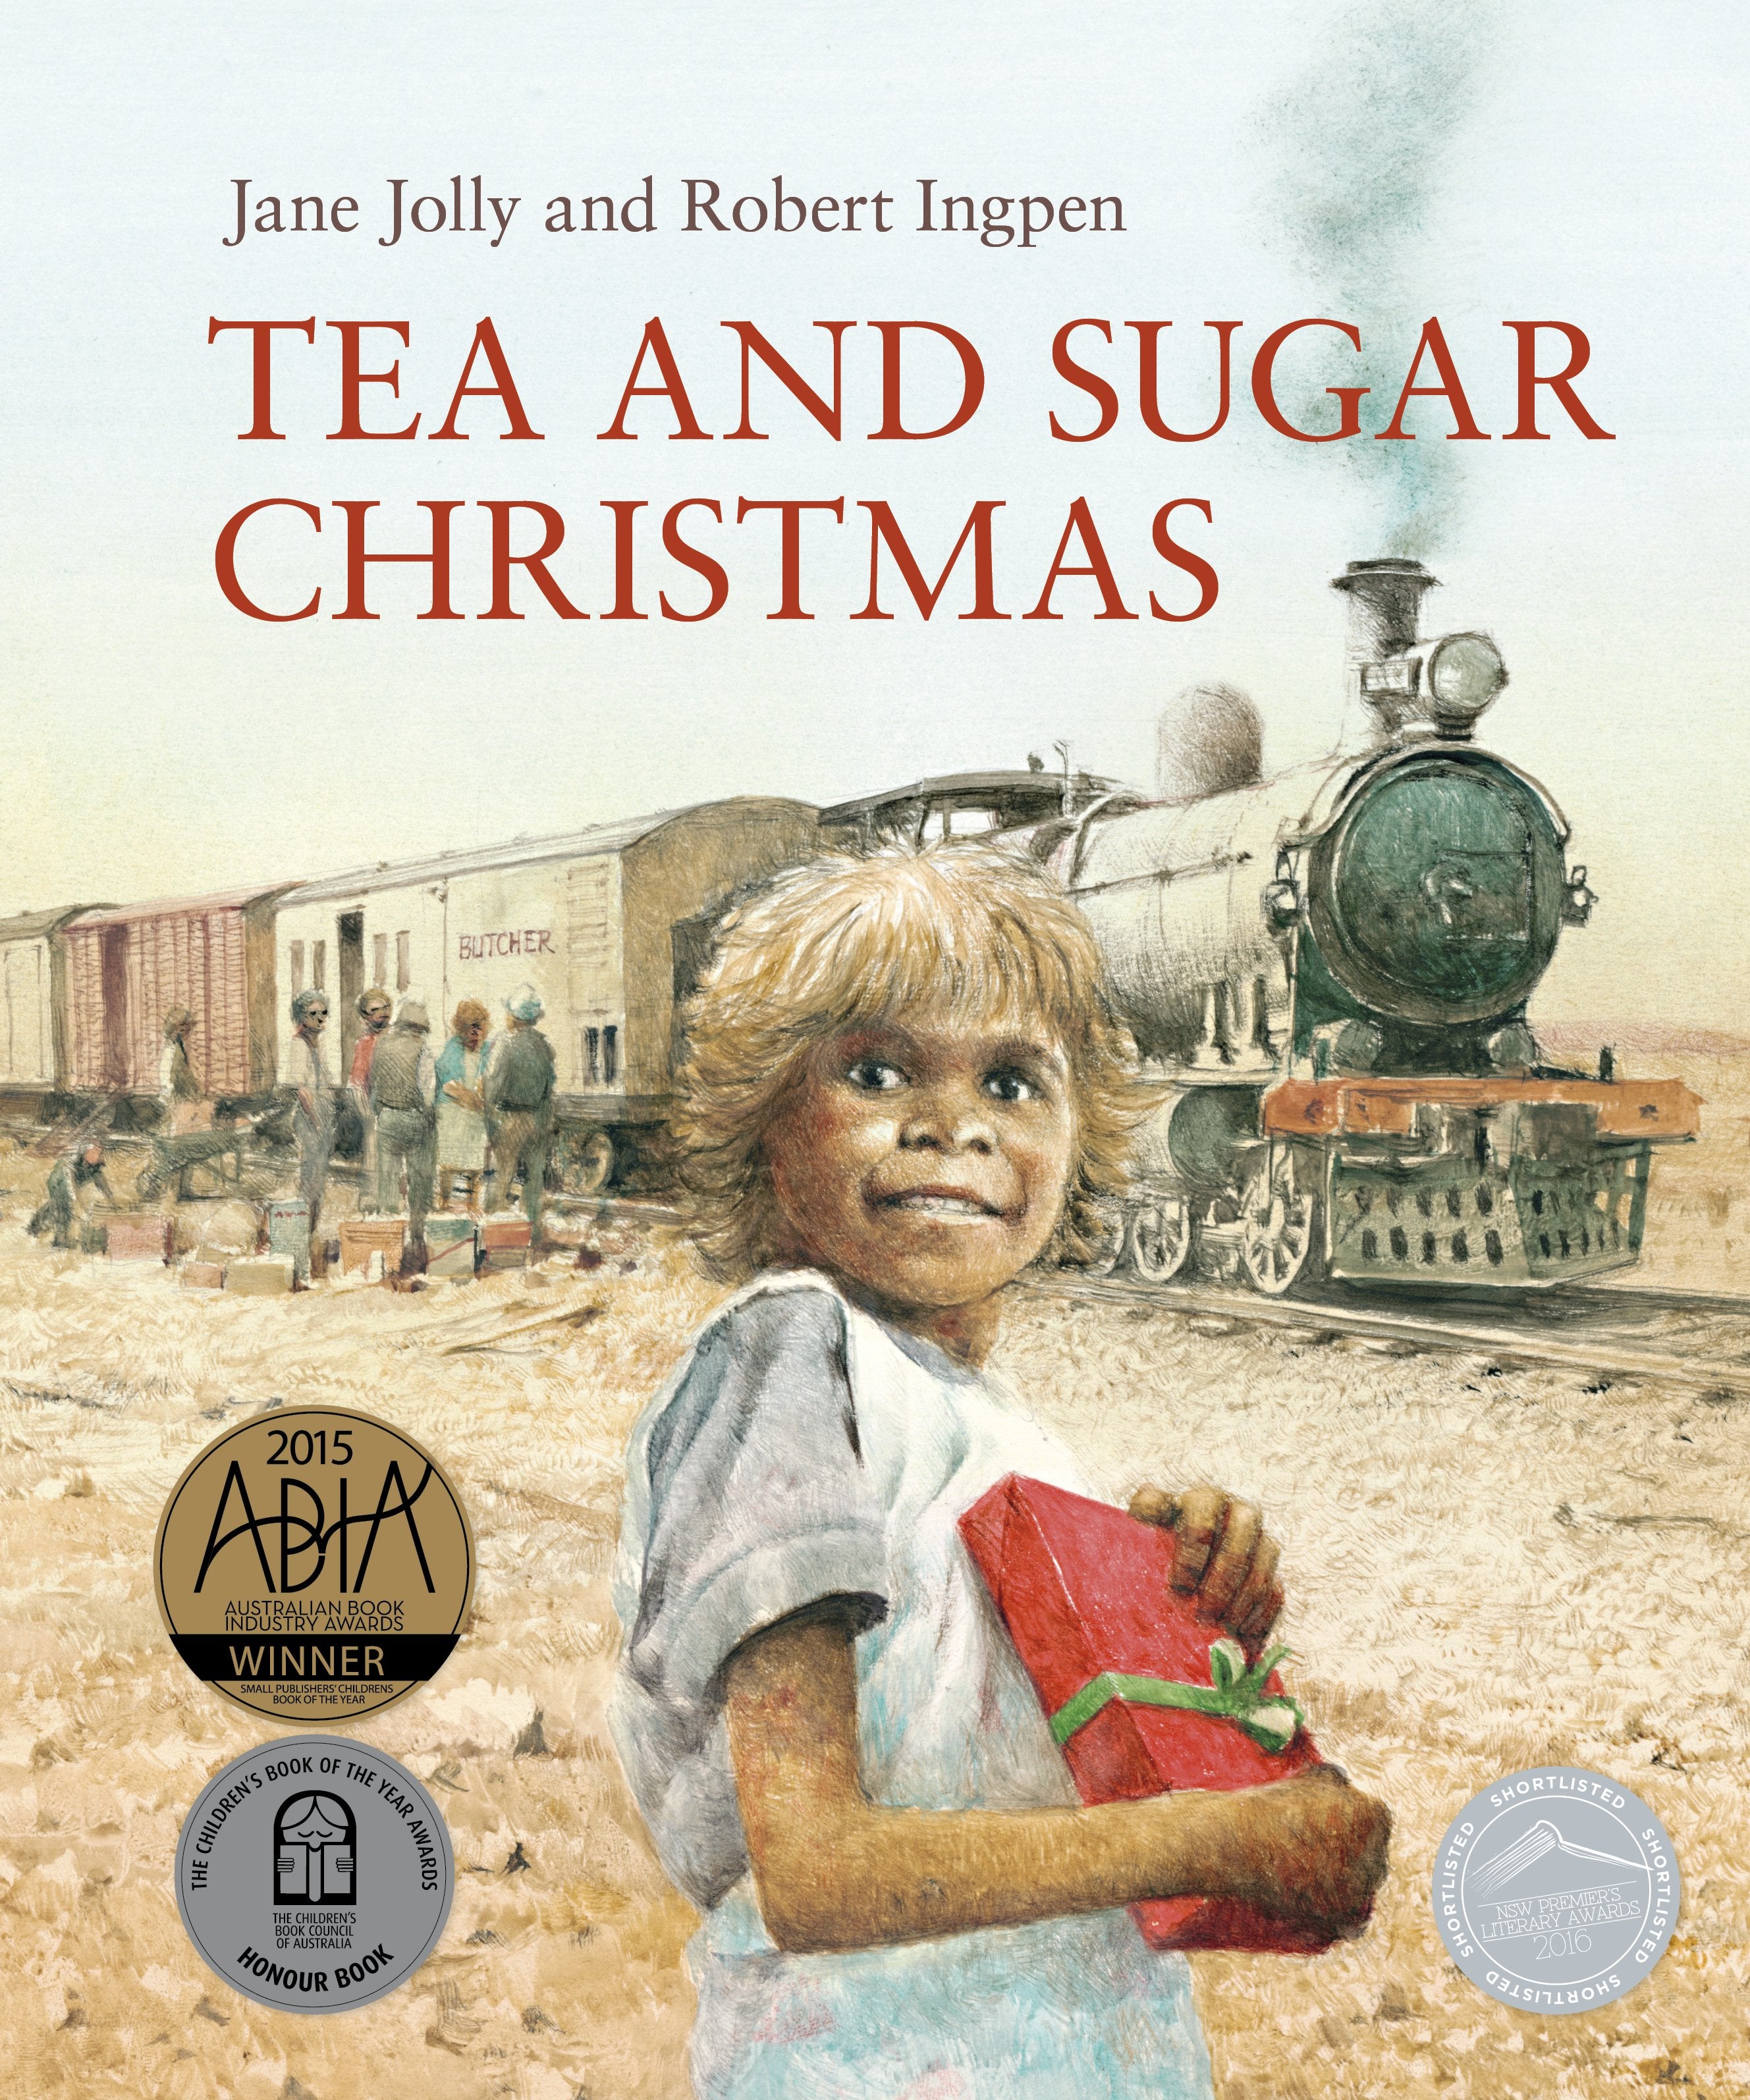 Tea and Sugar Christmas by Jane Jolly and Robert Ingpen (illustrator)